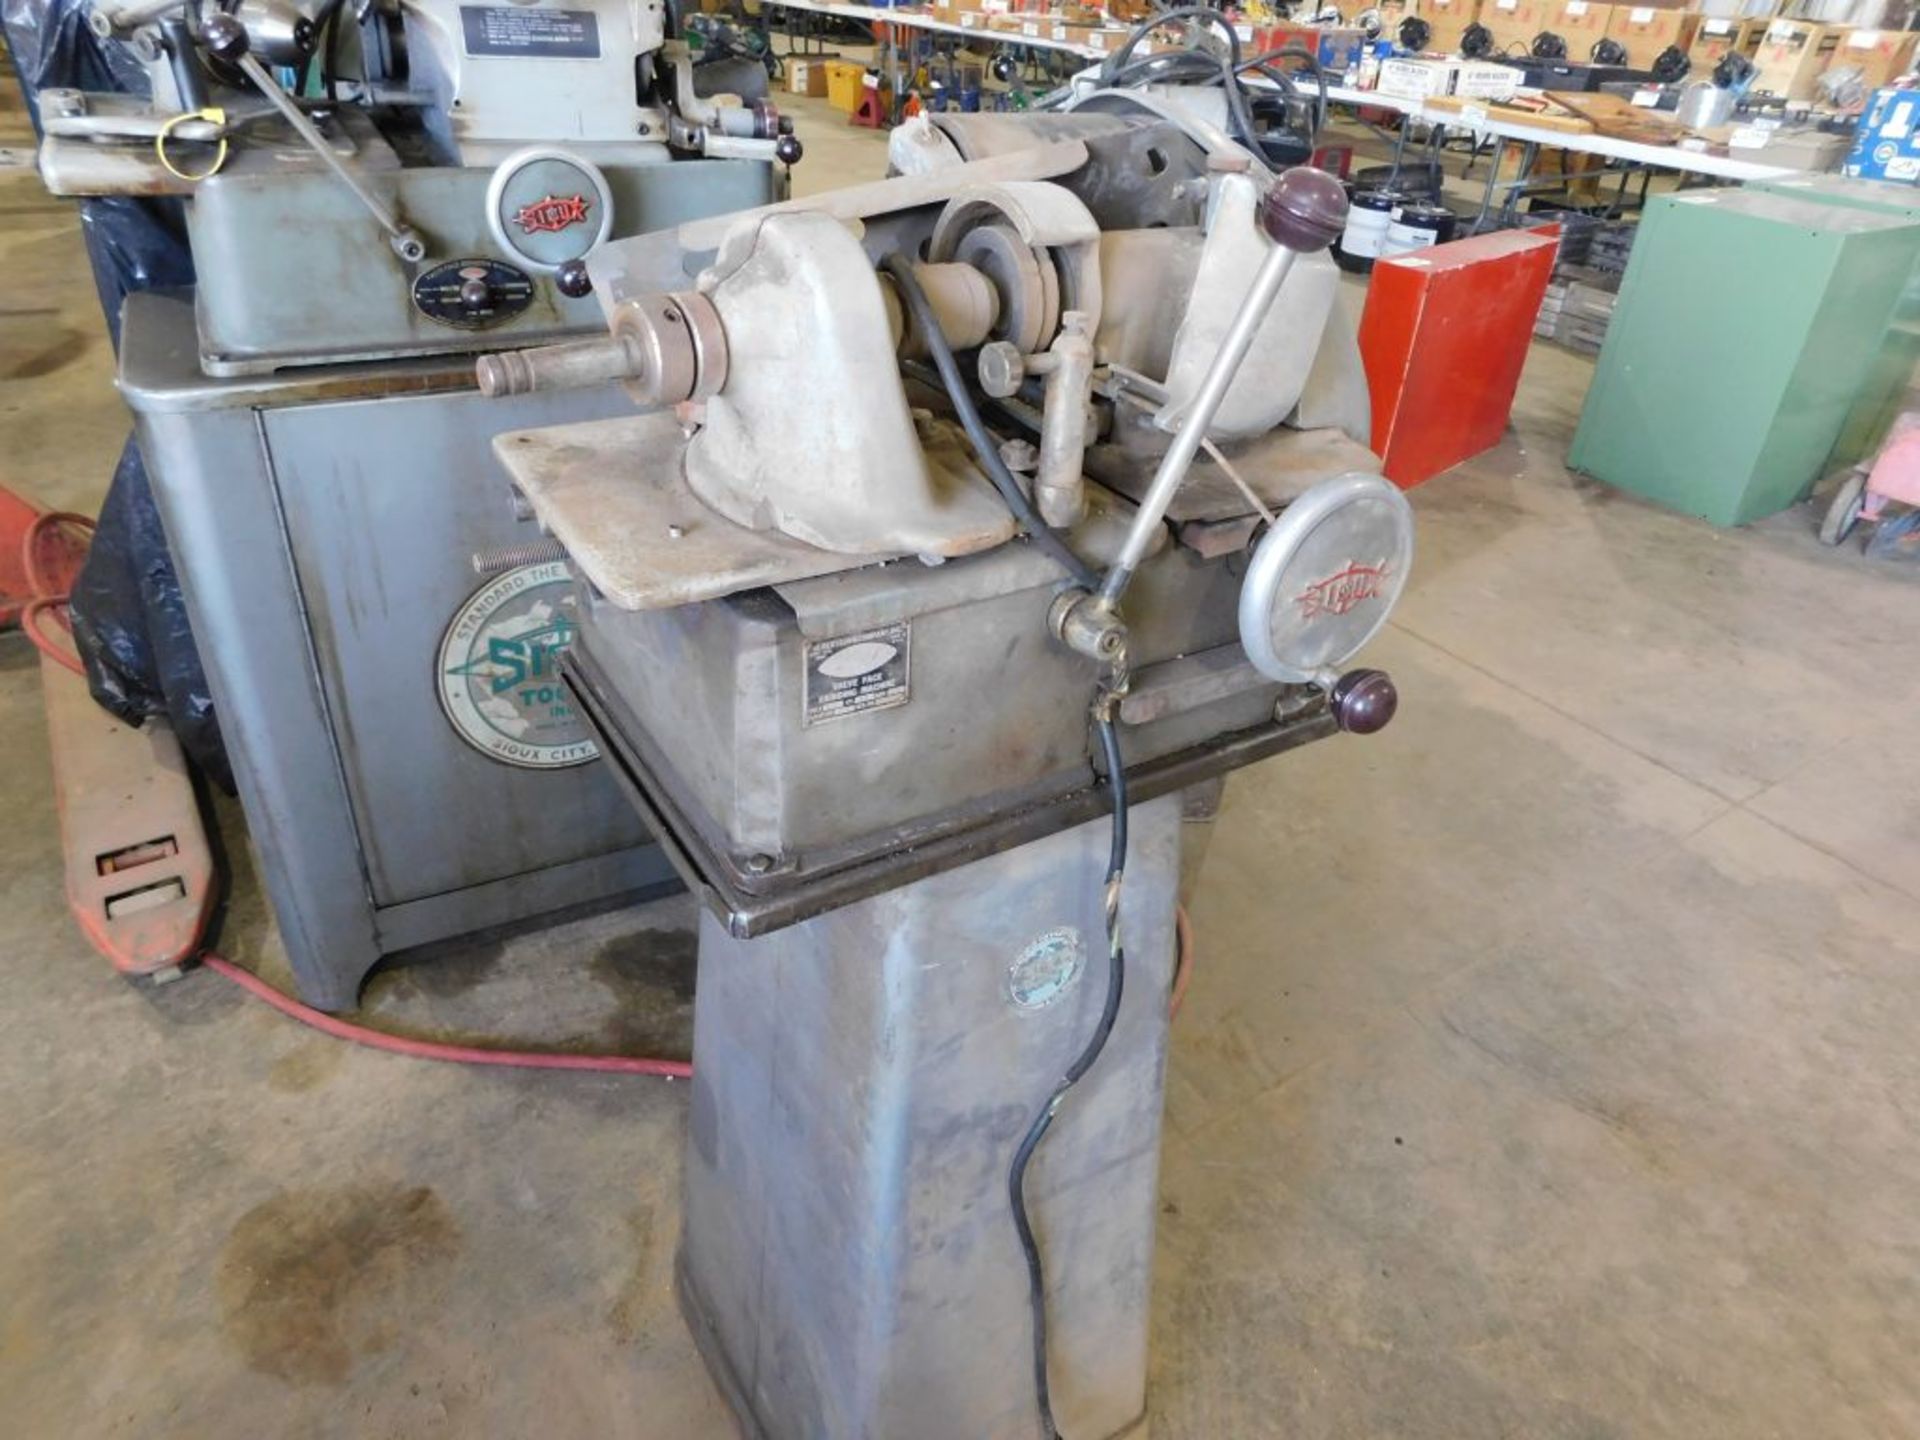 Sioux valve face grinding machine, model 645L, 115 volt. - Image 2 of 3